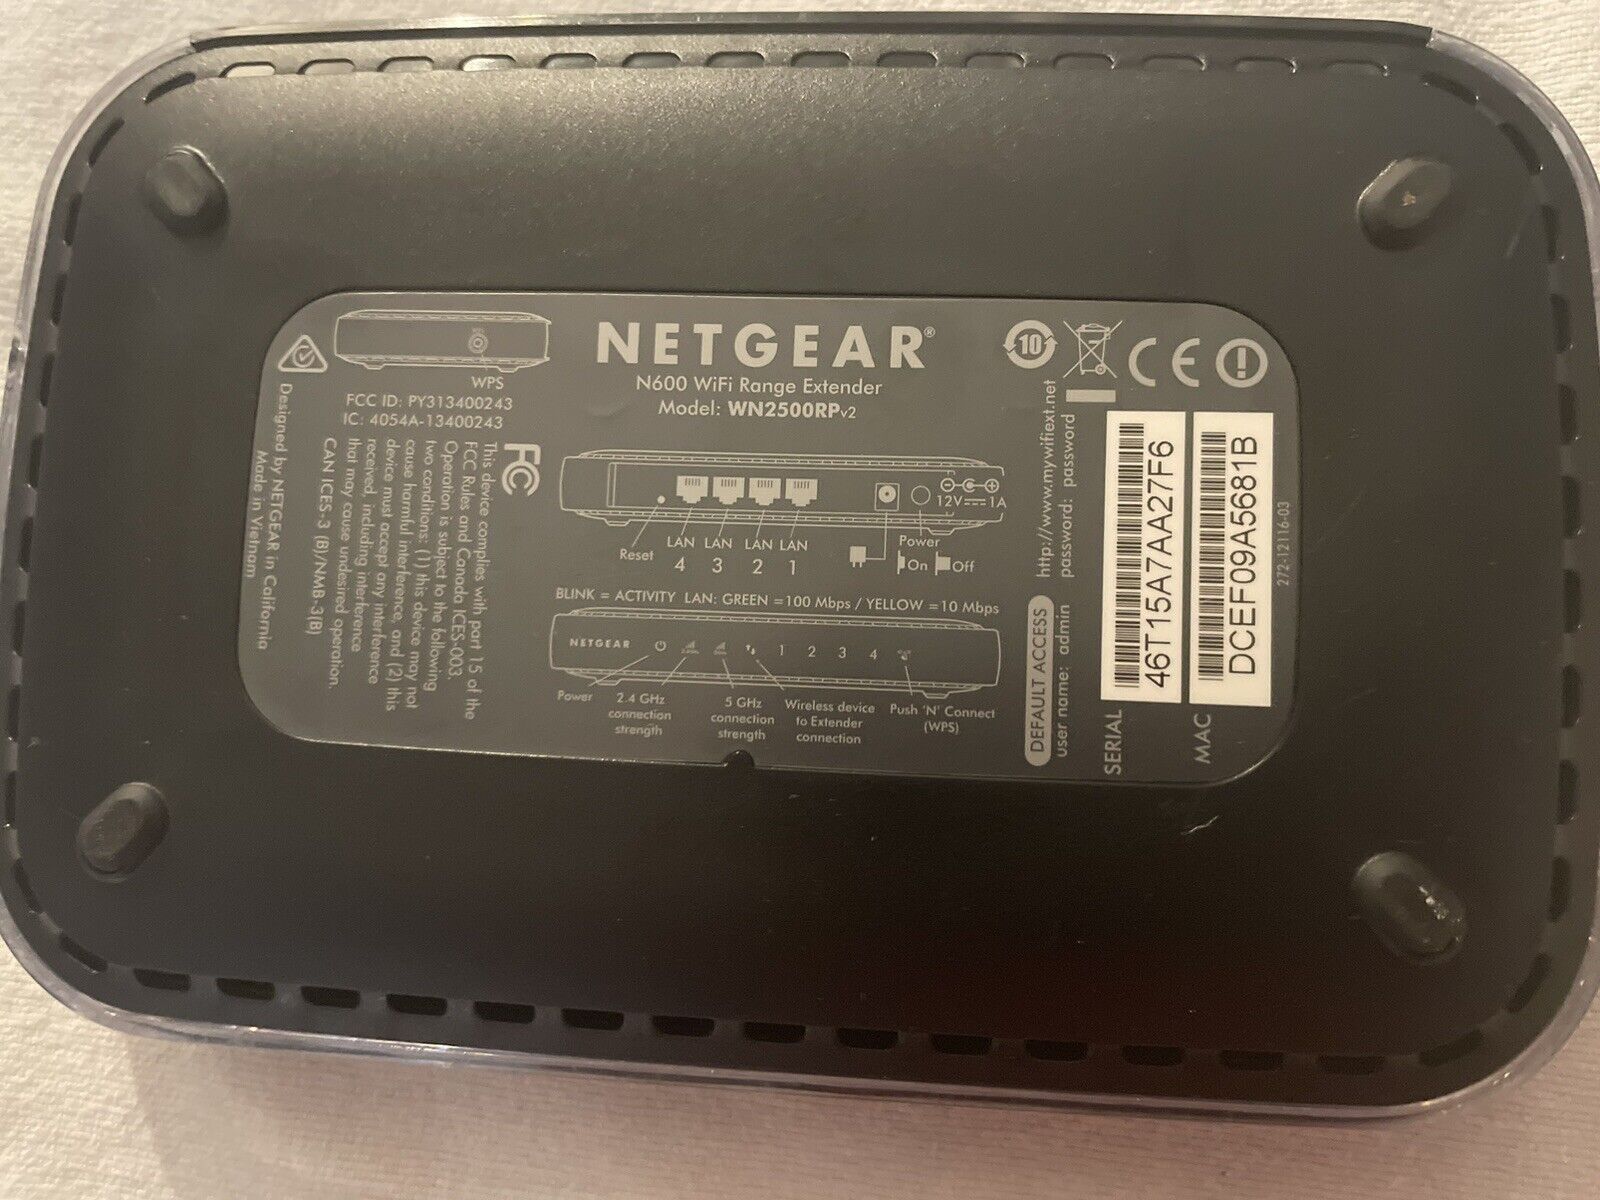 Netgear WN2500RP V2 N600 WiFi Range Extender, no cords, No CD\'s, No Software.